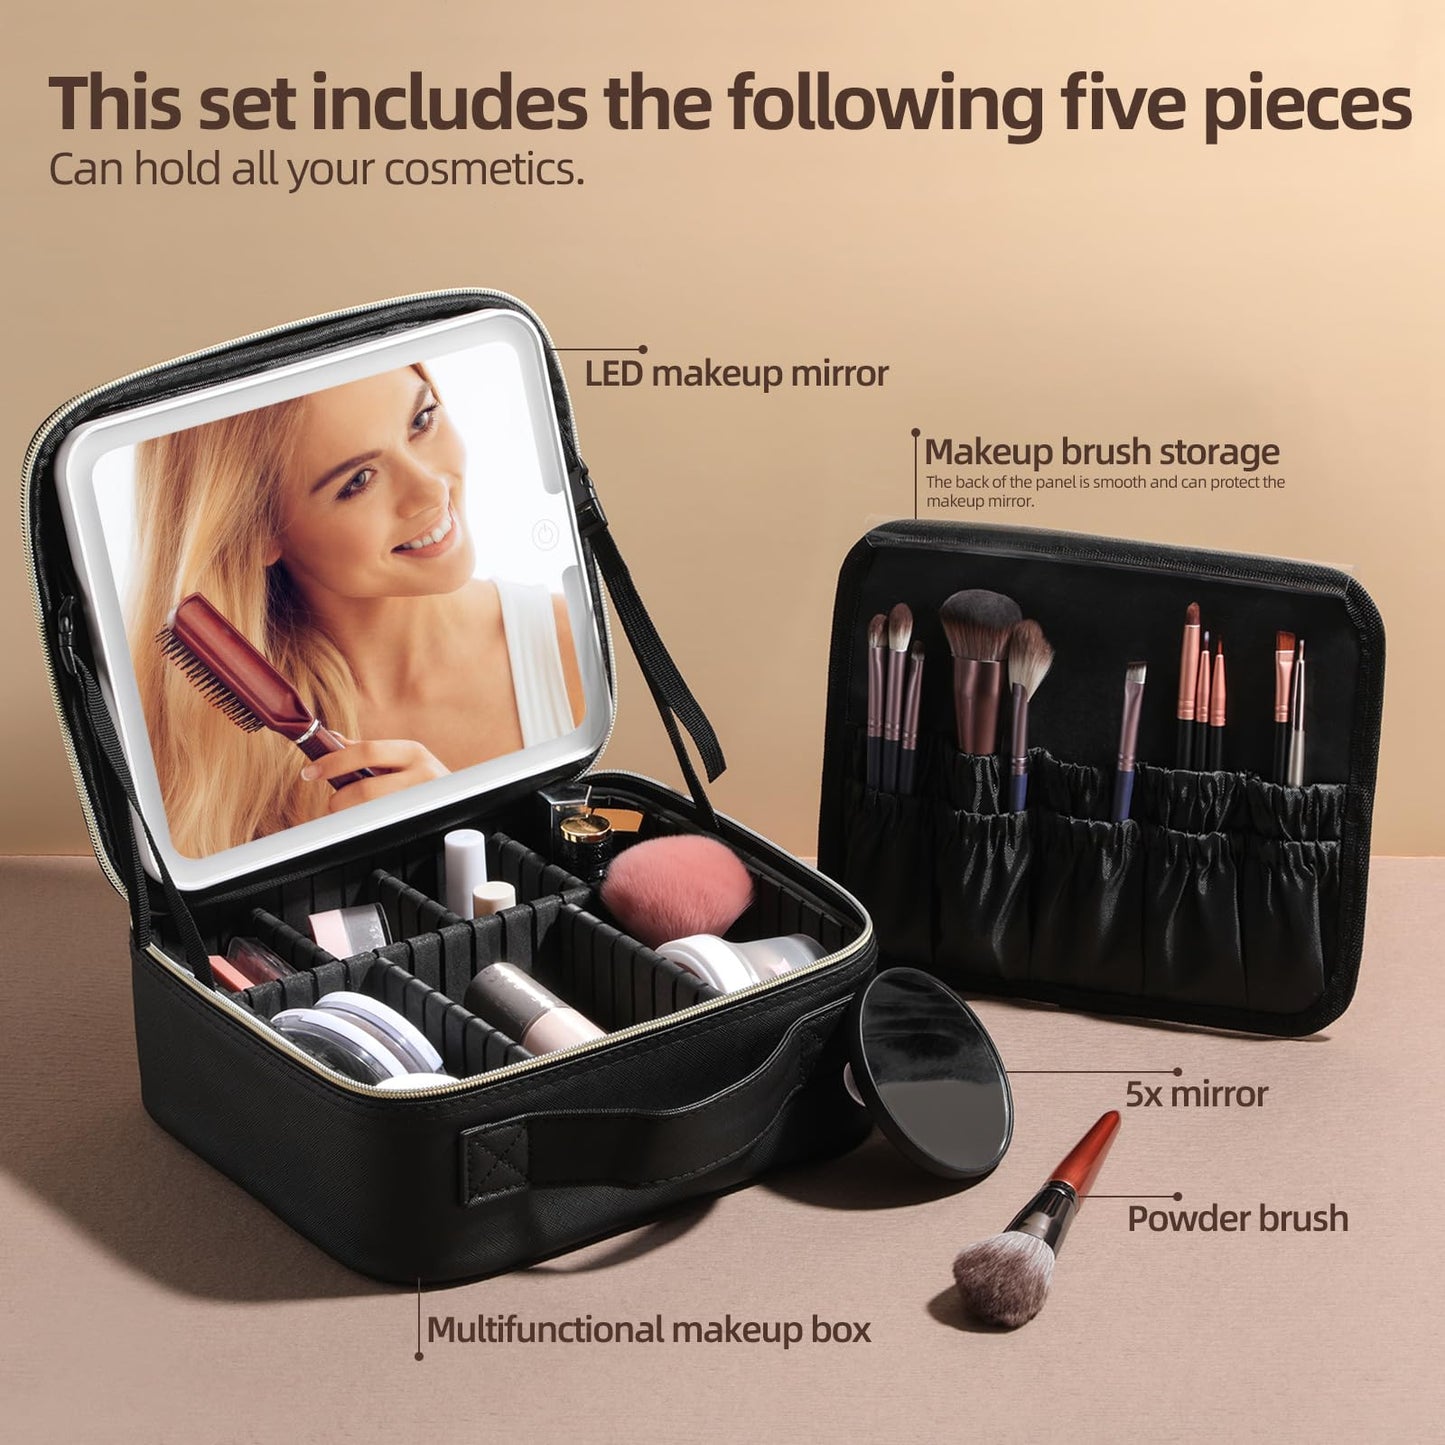 BS-MALL Makeup LED Case Makeup Brush Holder With LED Mirror Makeup Tool Organizer Bag with 18 Pcs Makeup Brushes